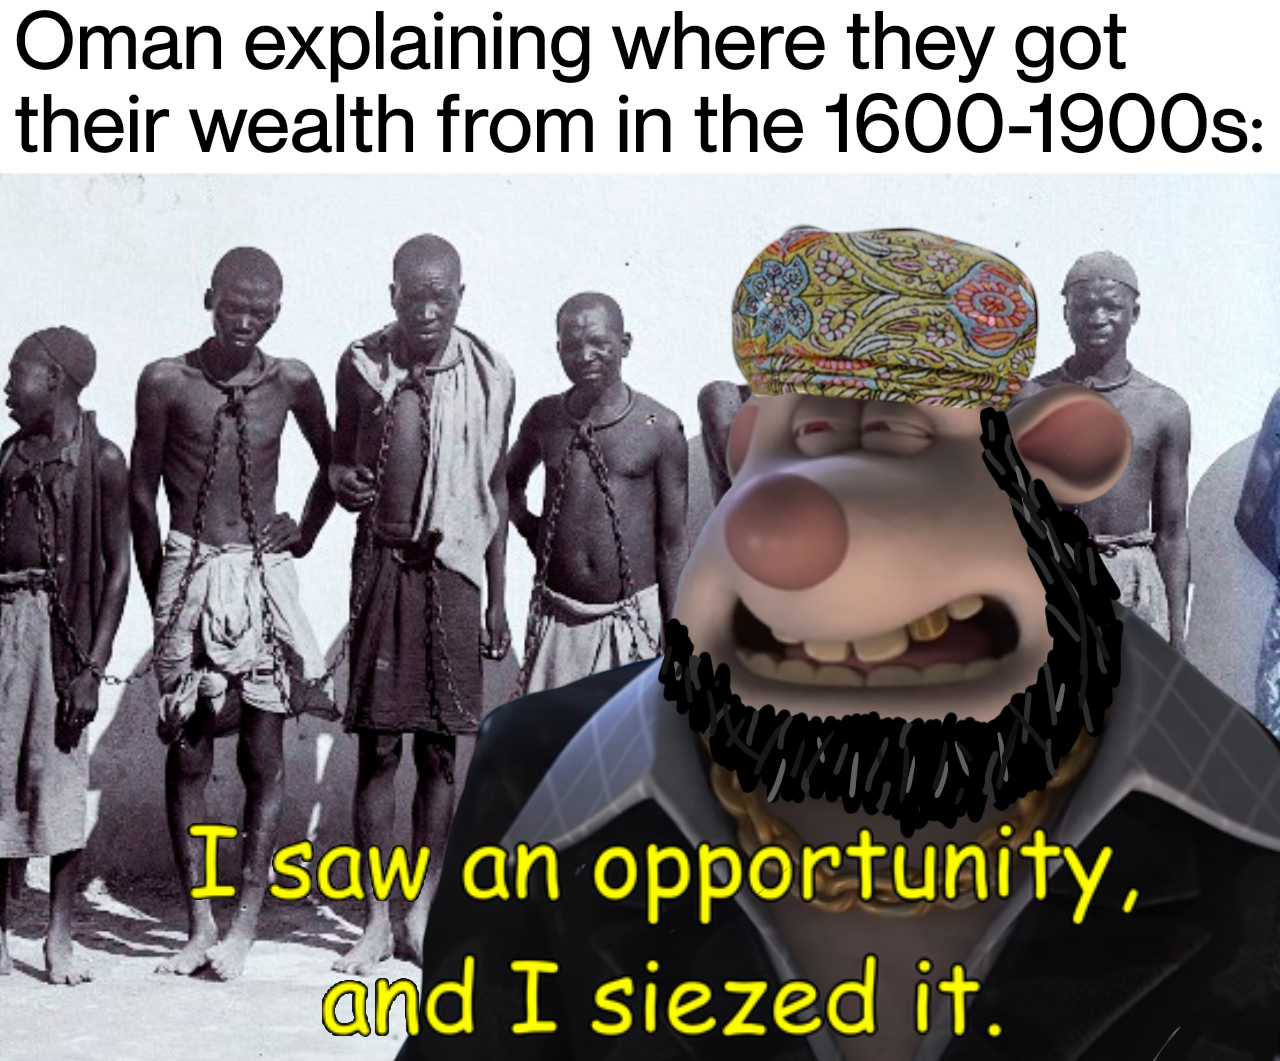 The Sultan of Oman lives in Zanzibar now